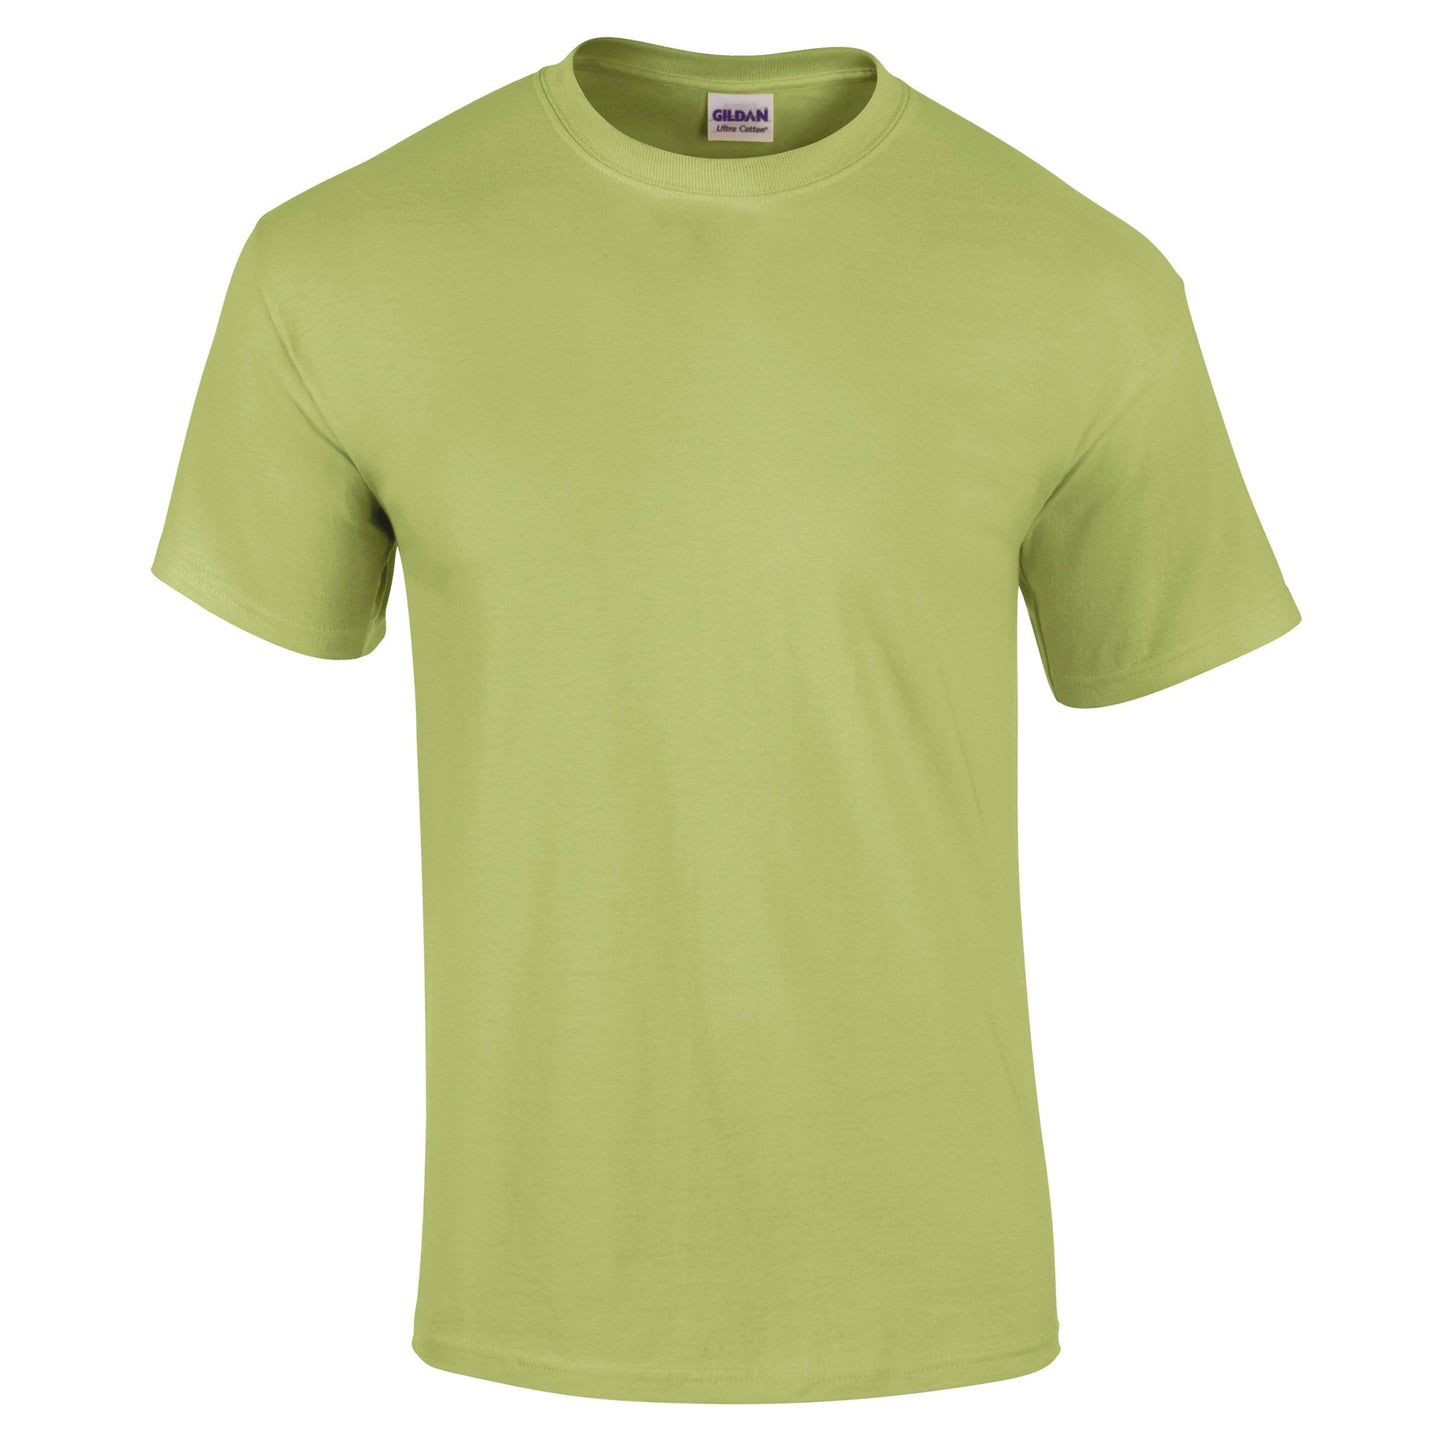 X5CAPE Custom T-Shirt - Pastel Colours